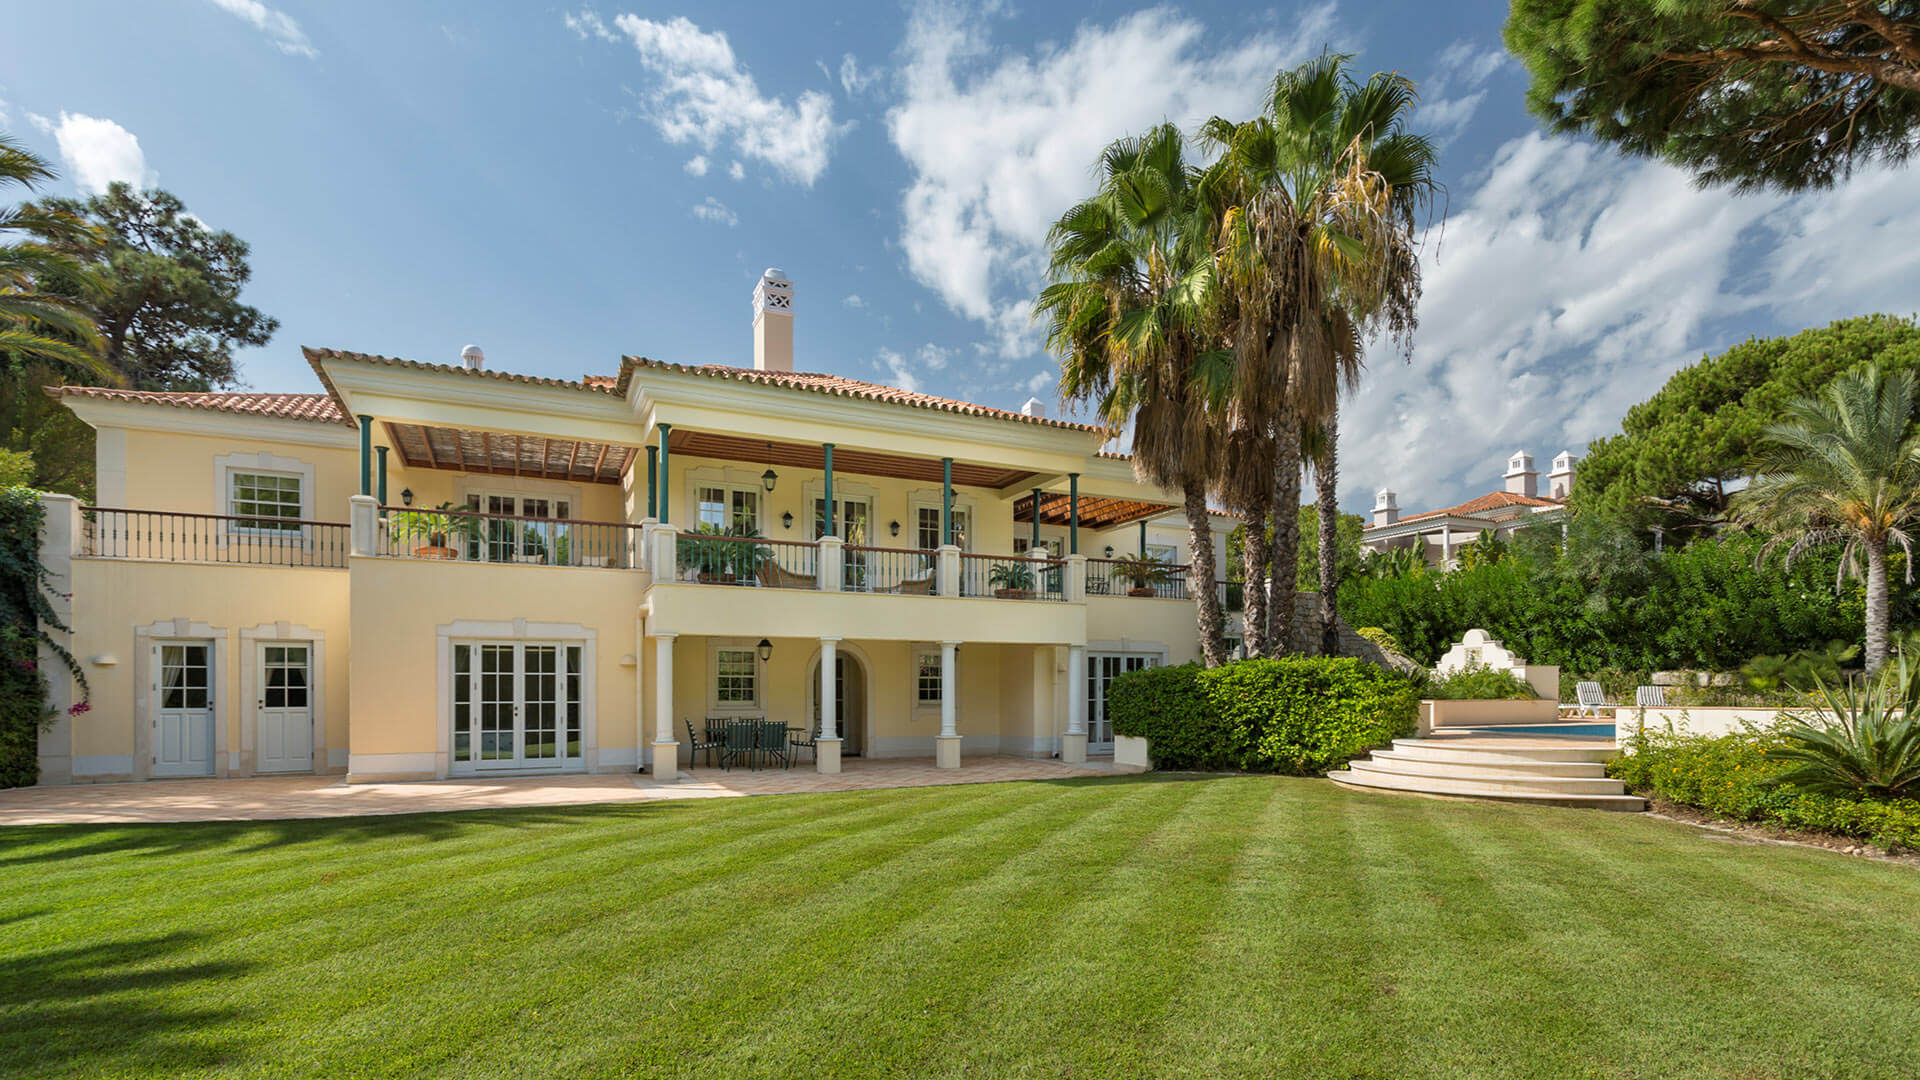 Villa Villa Noccila, Ferienvilla mieten Algarve